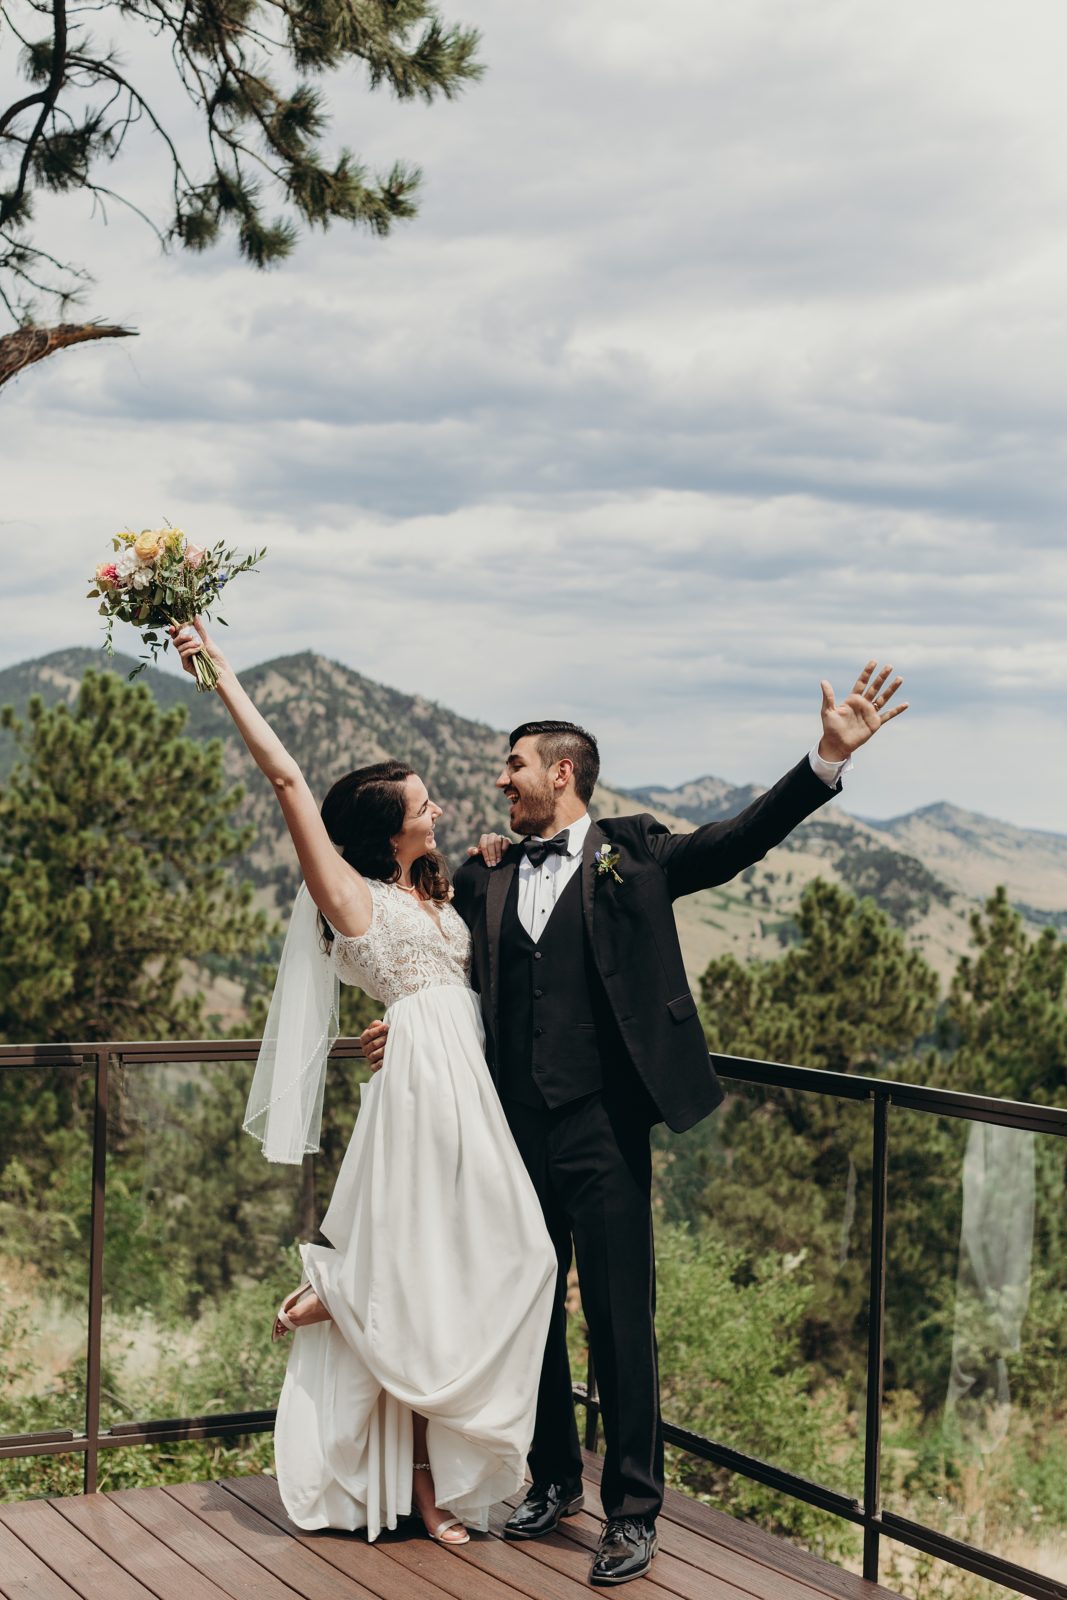 Flagstaff House restaurant wedding, Colorado restaurant wedding venue, intimate wedding venue, Boulder wedding venue, wedding venues with mountain views